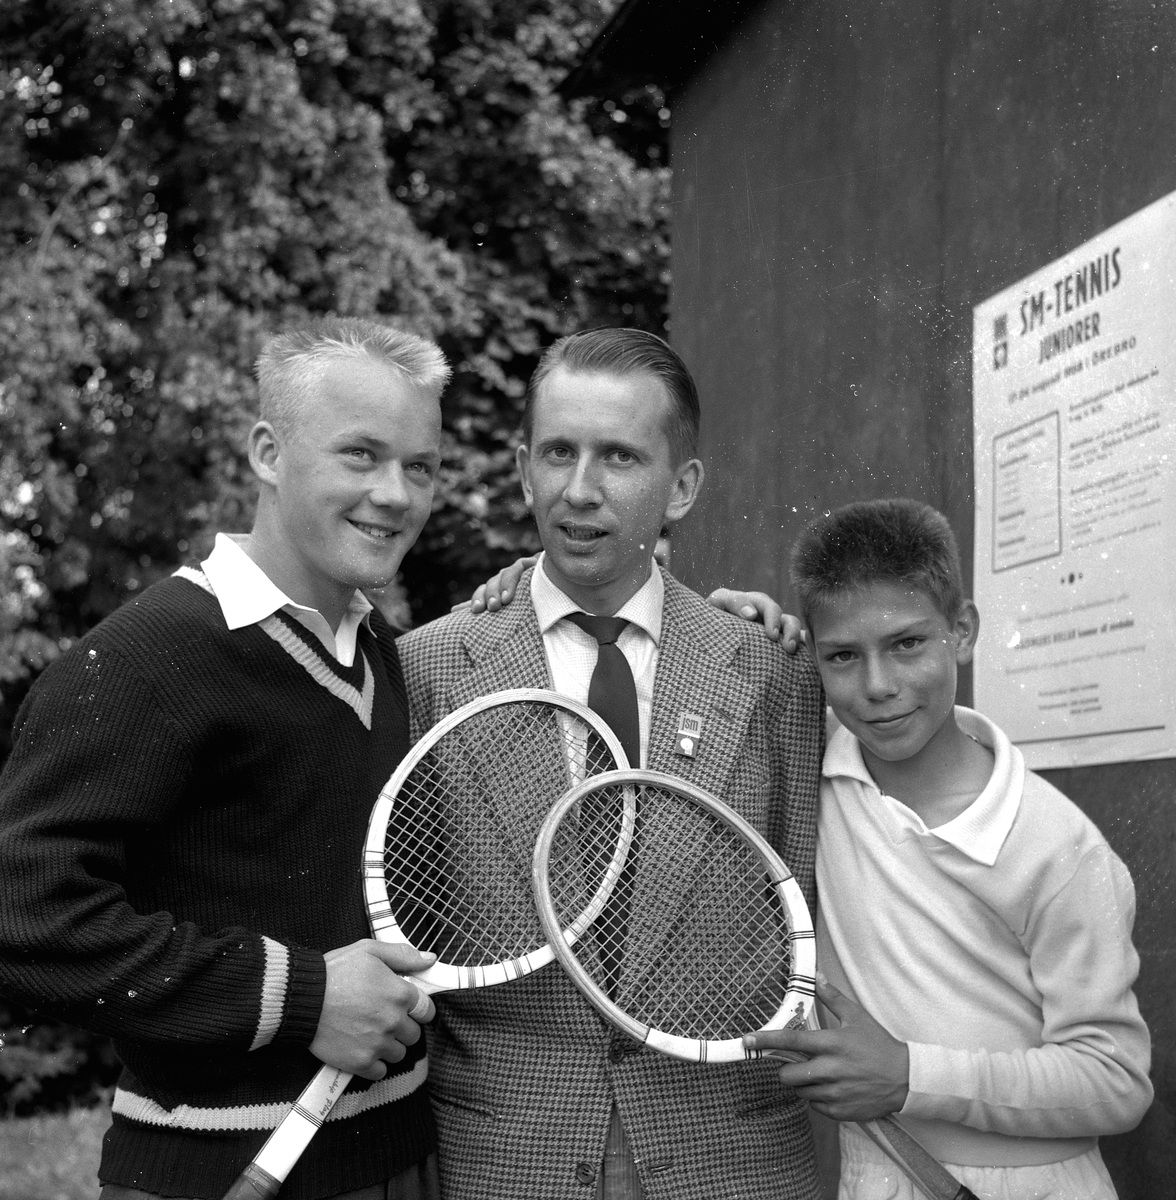 JSM i tennis.
18 augusti 1958.